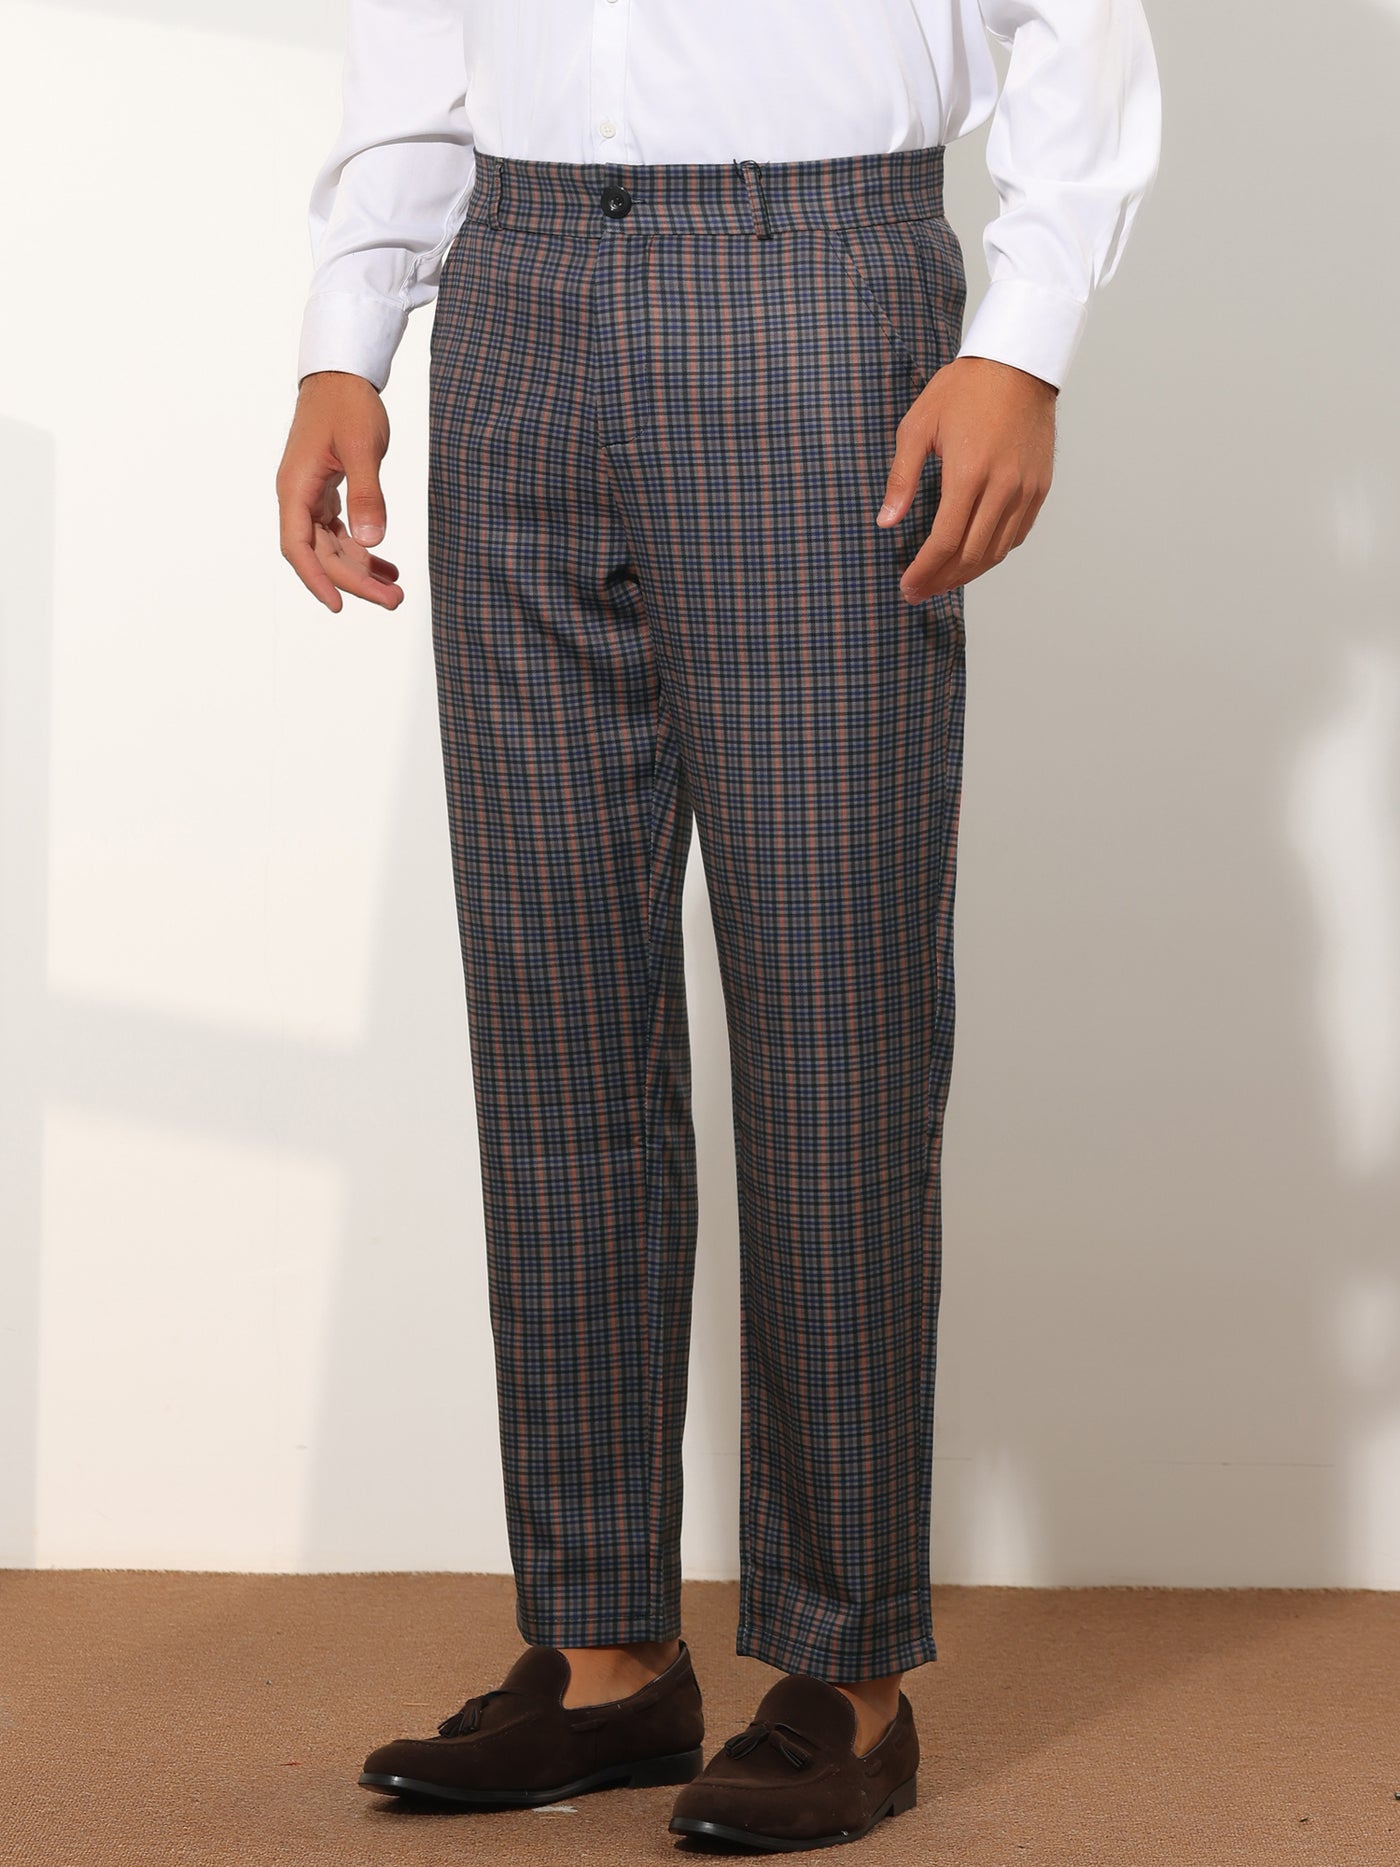 Bublédon Checked Dress Pants for Men's Button Closure Flat Front Business Plaid Pattern Trousers